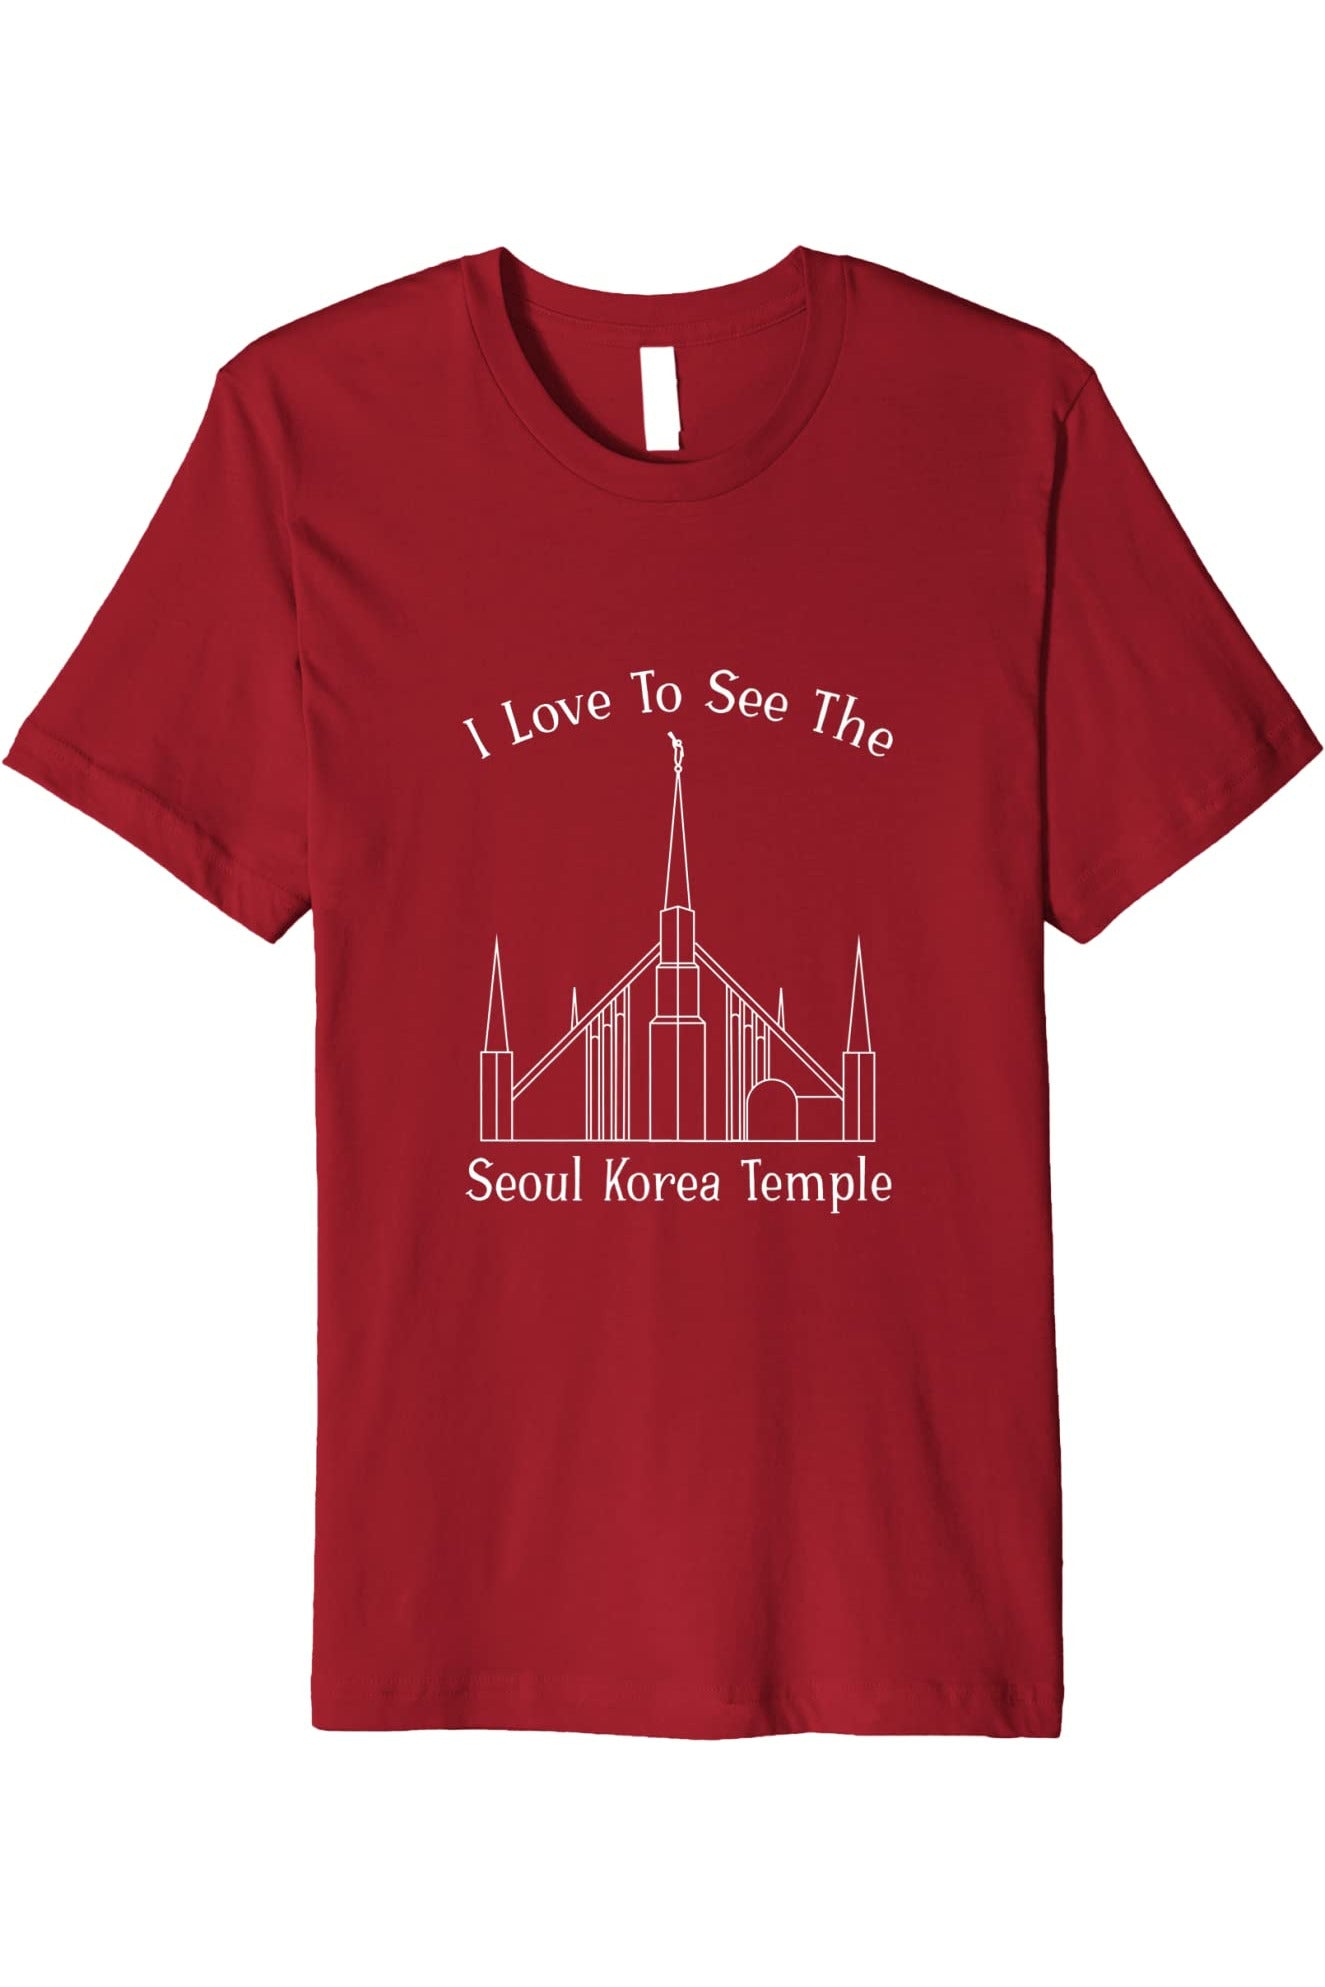 Seoul Korea Temple T-Shirt - Premium - Happy Style (English) US